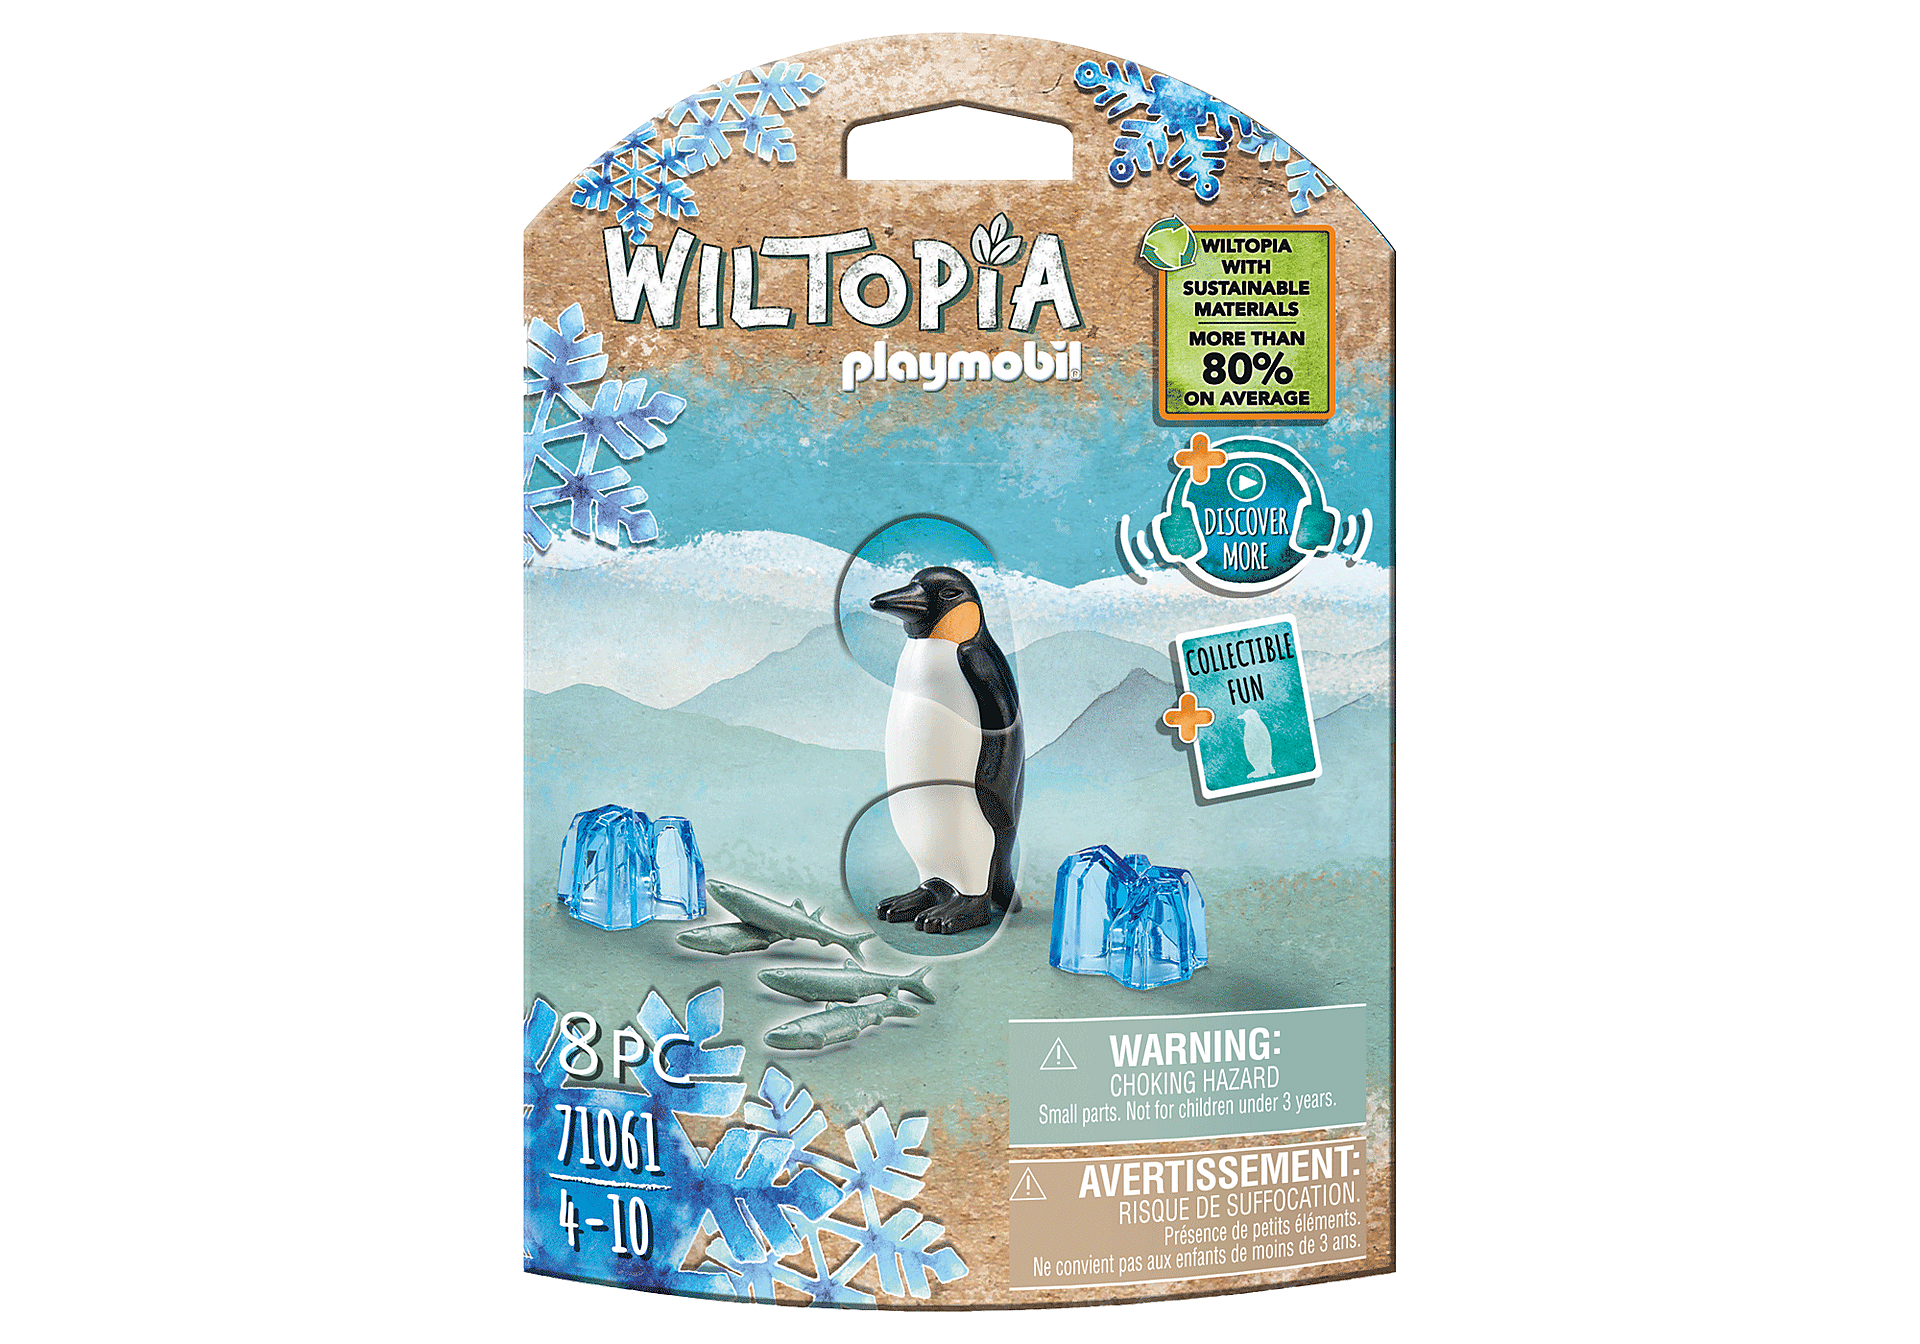 71061 Wiltopia - Emperor Penguin zoom image3